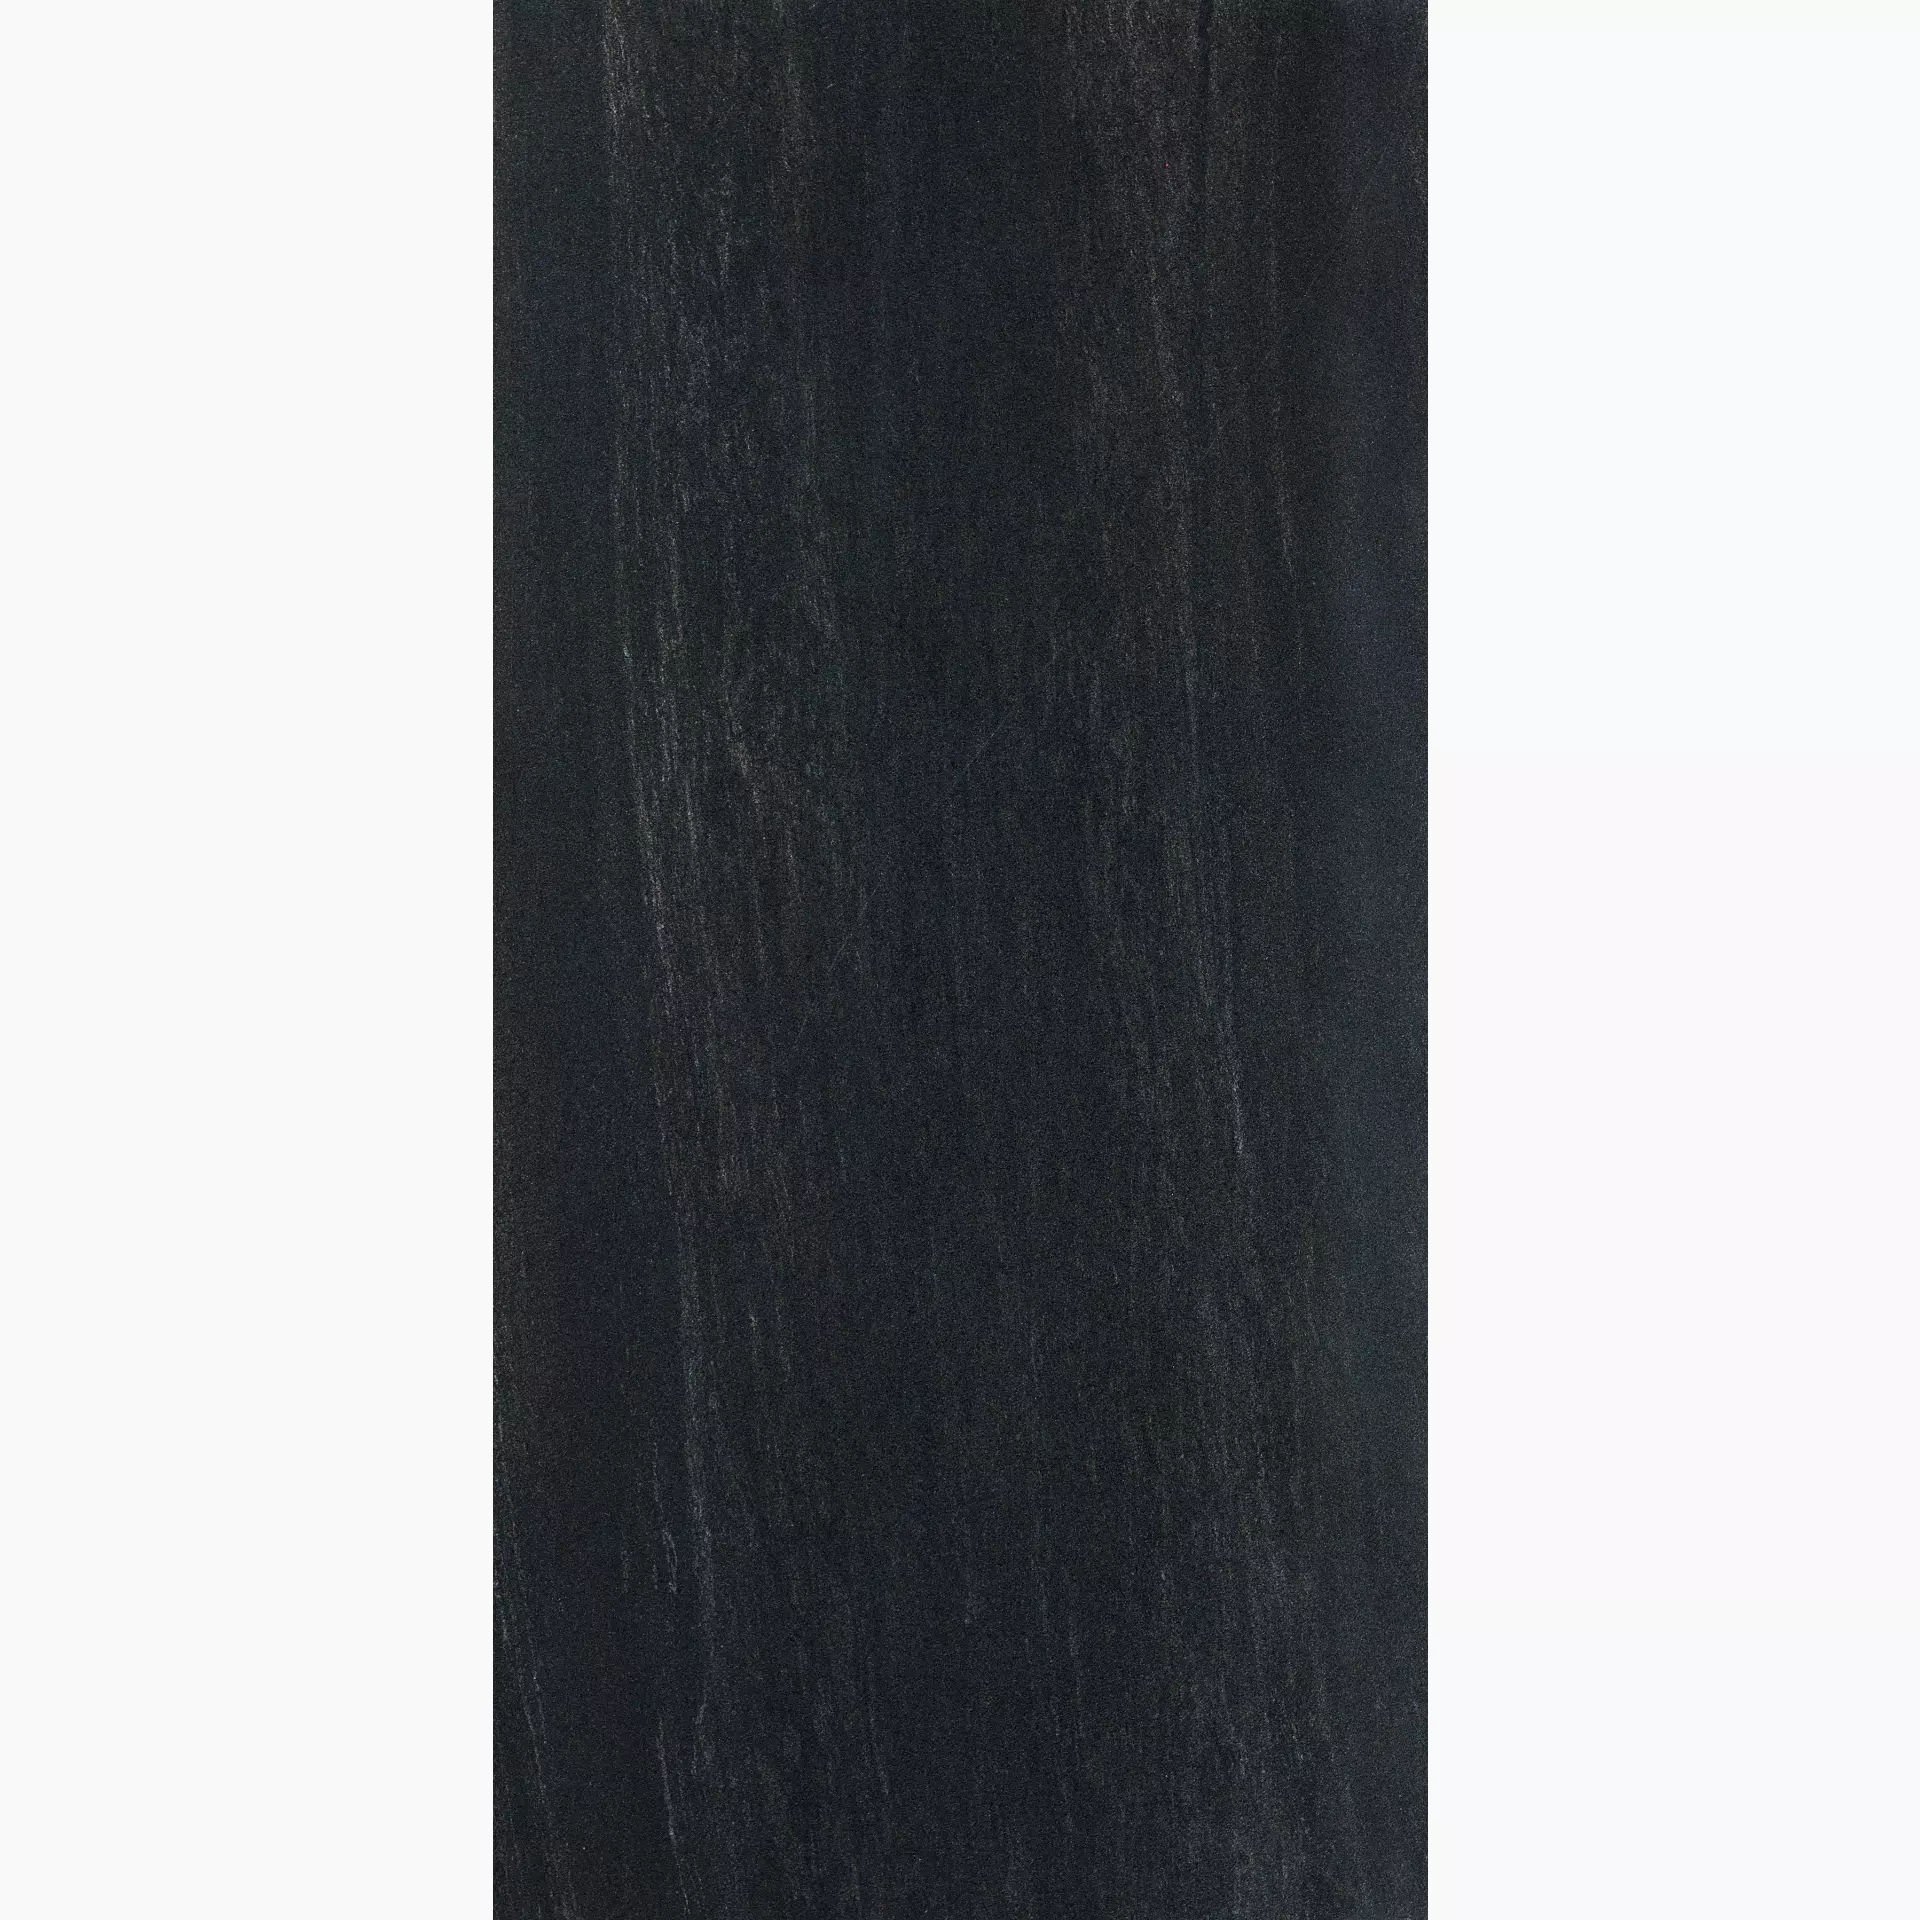 Ergon Stone Project Black Naturale Falda E6L8 60x120cm rectified 9,5mm